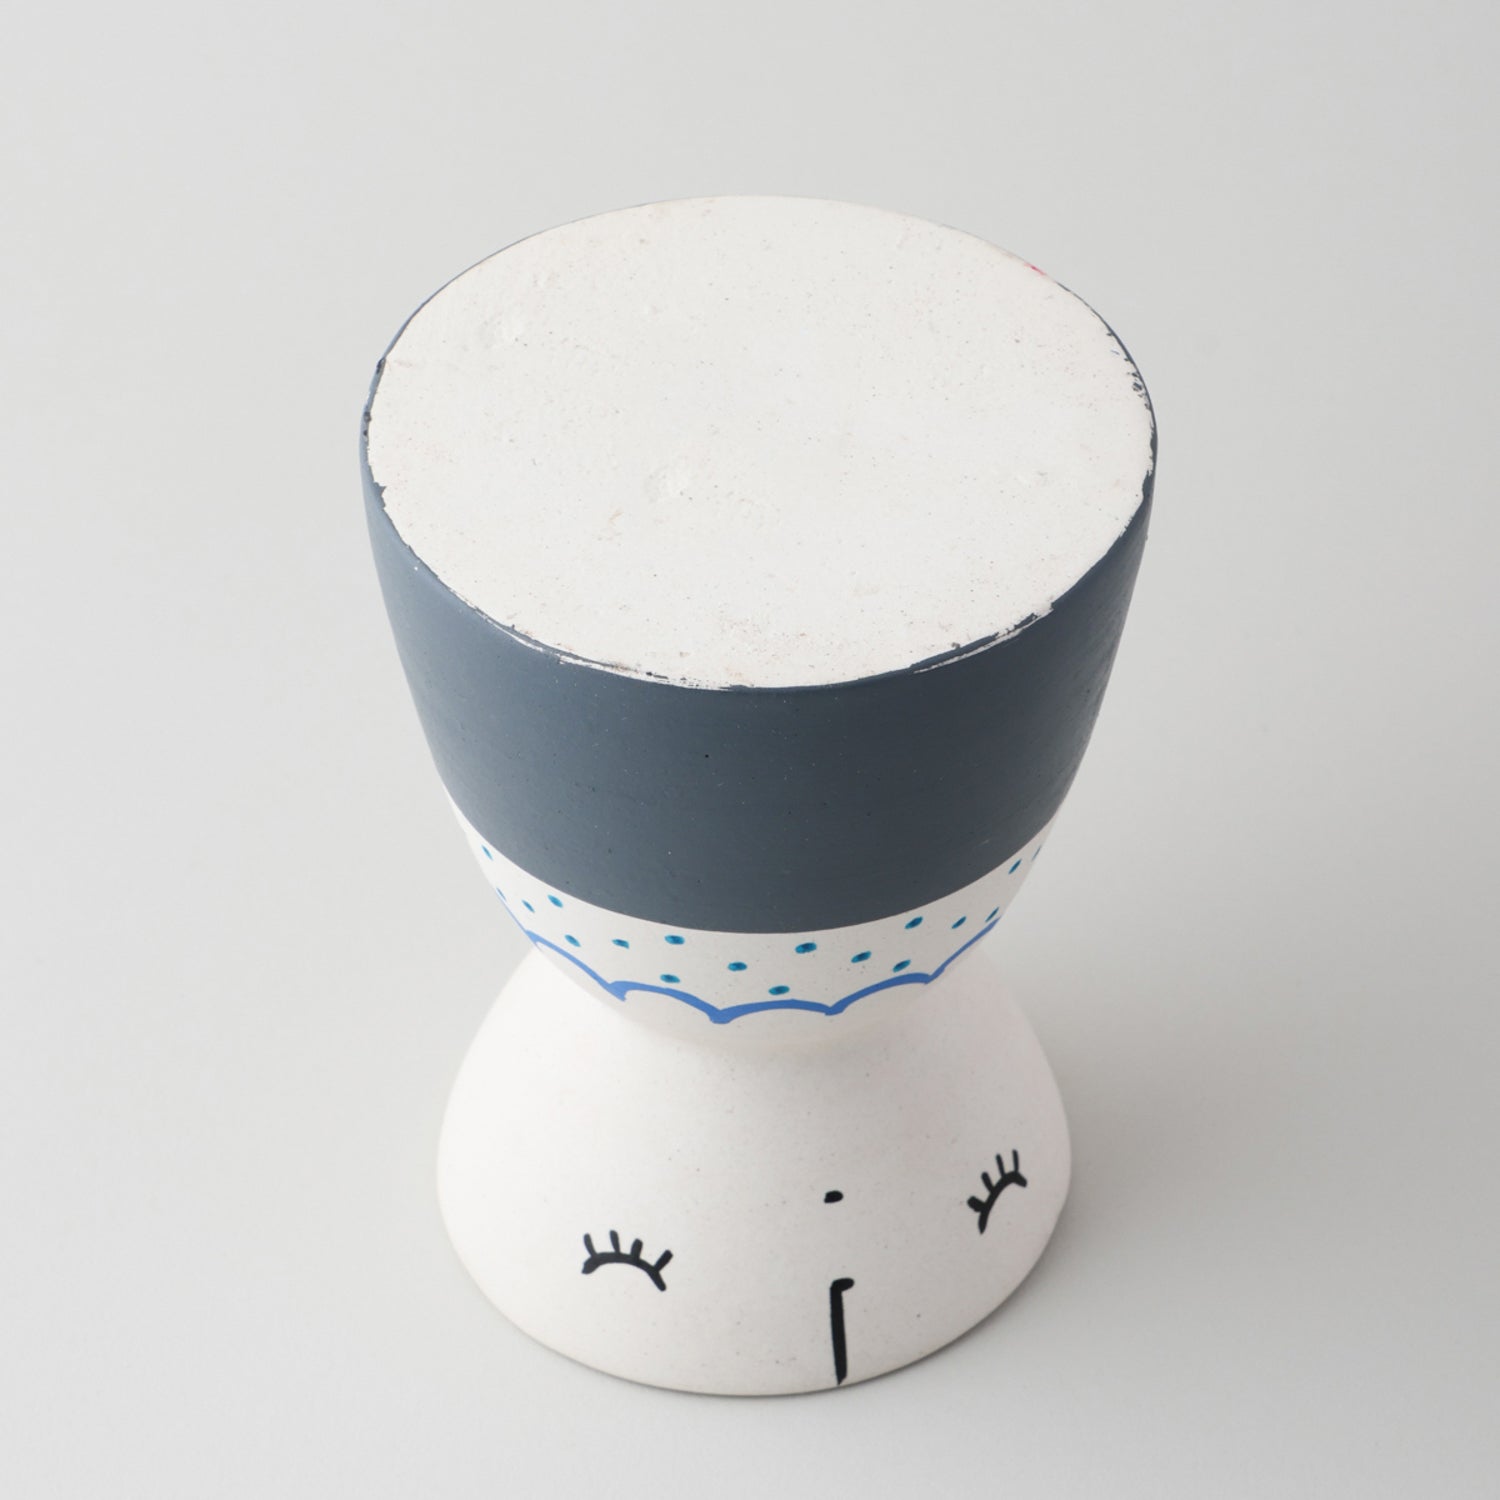 White Ceramic Flower Vase with Grey Block & Blue Edge 5x4